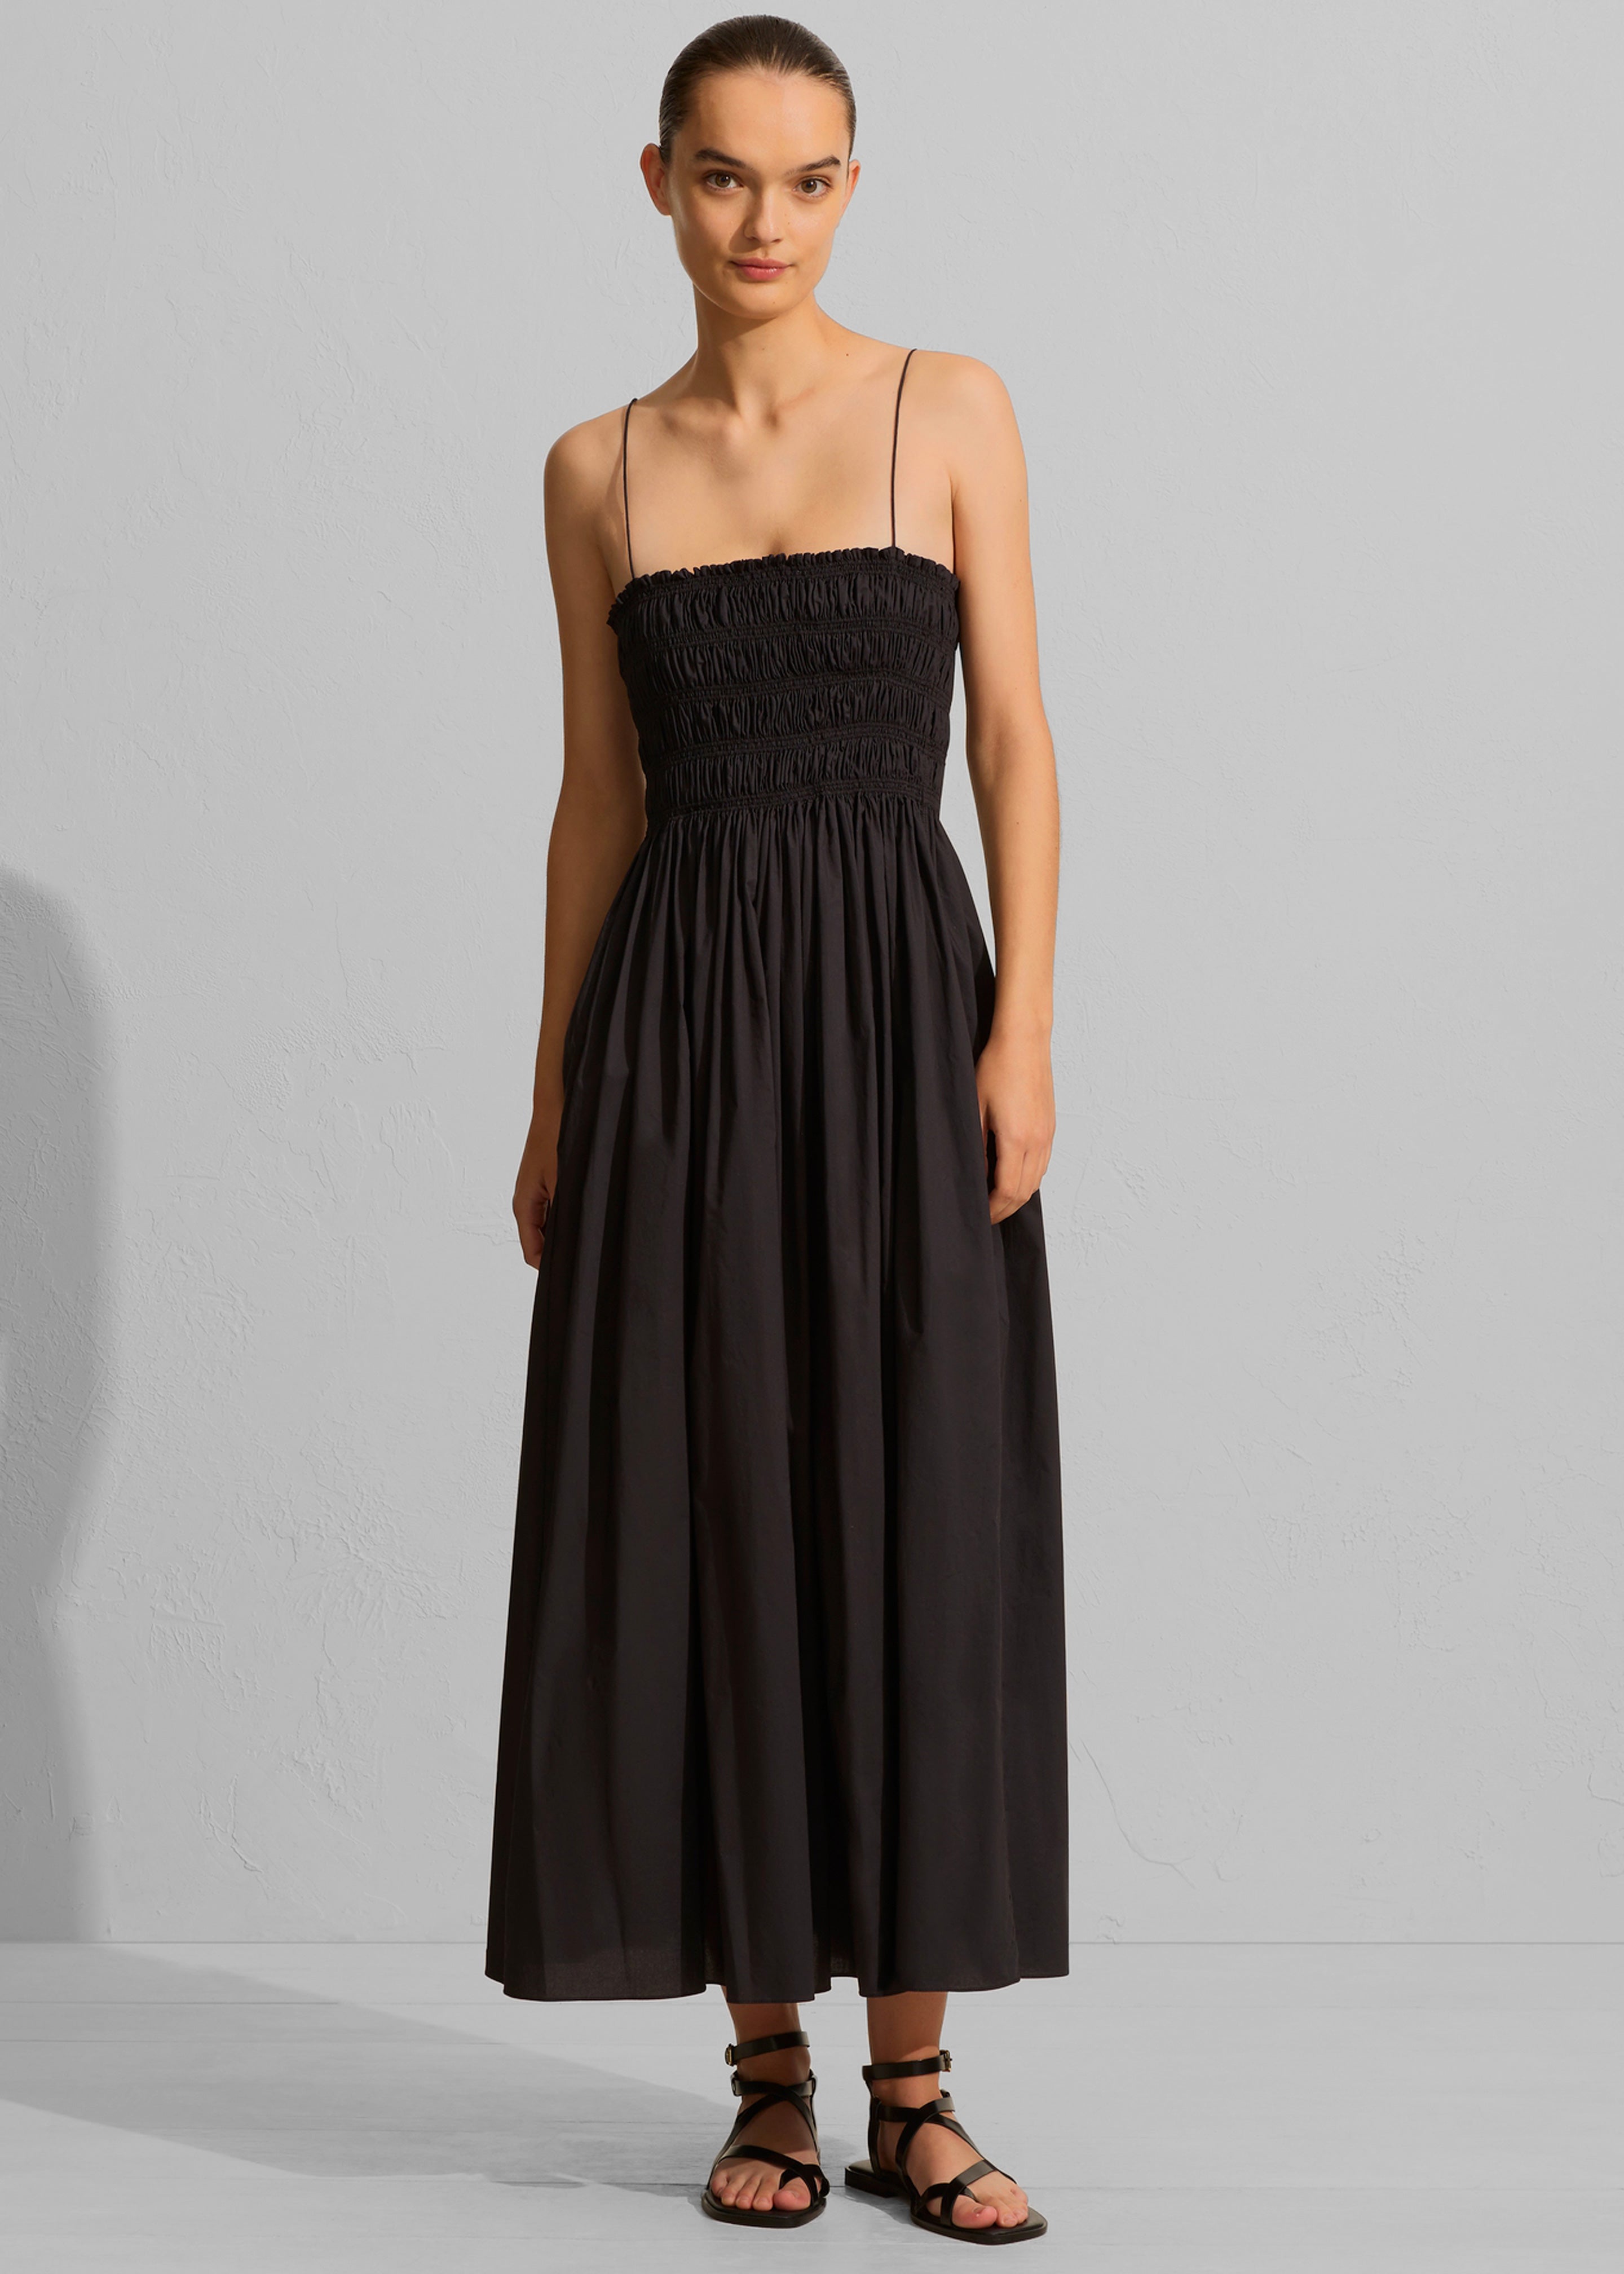 Matteau Shirred Bodice Dress - Black - 3